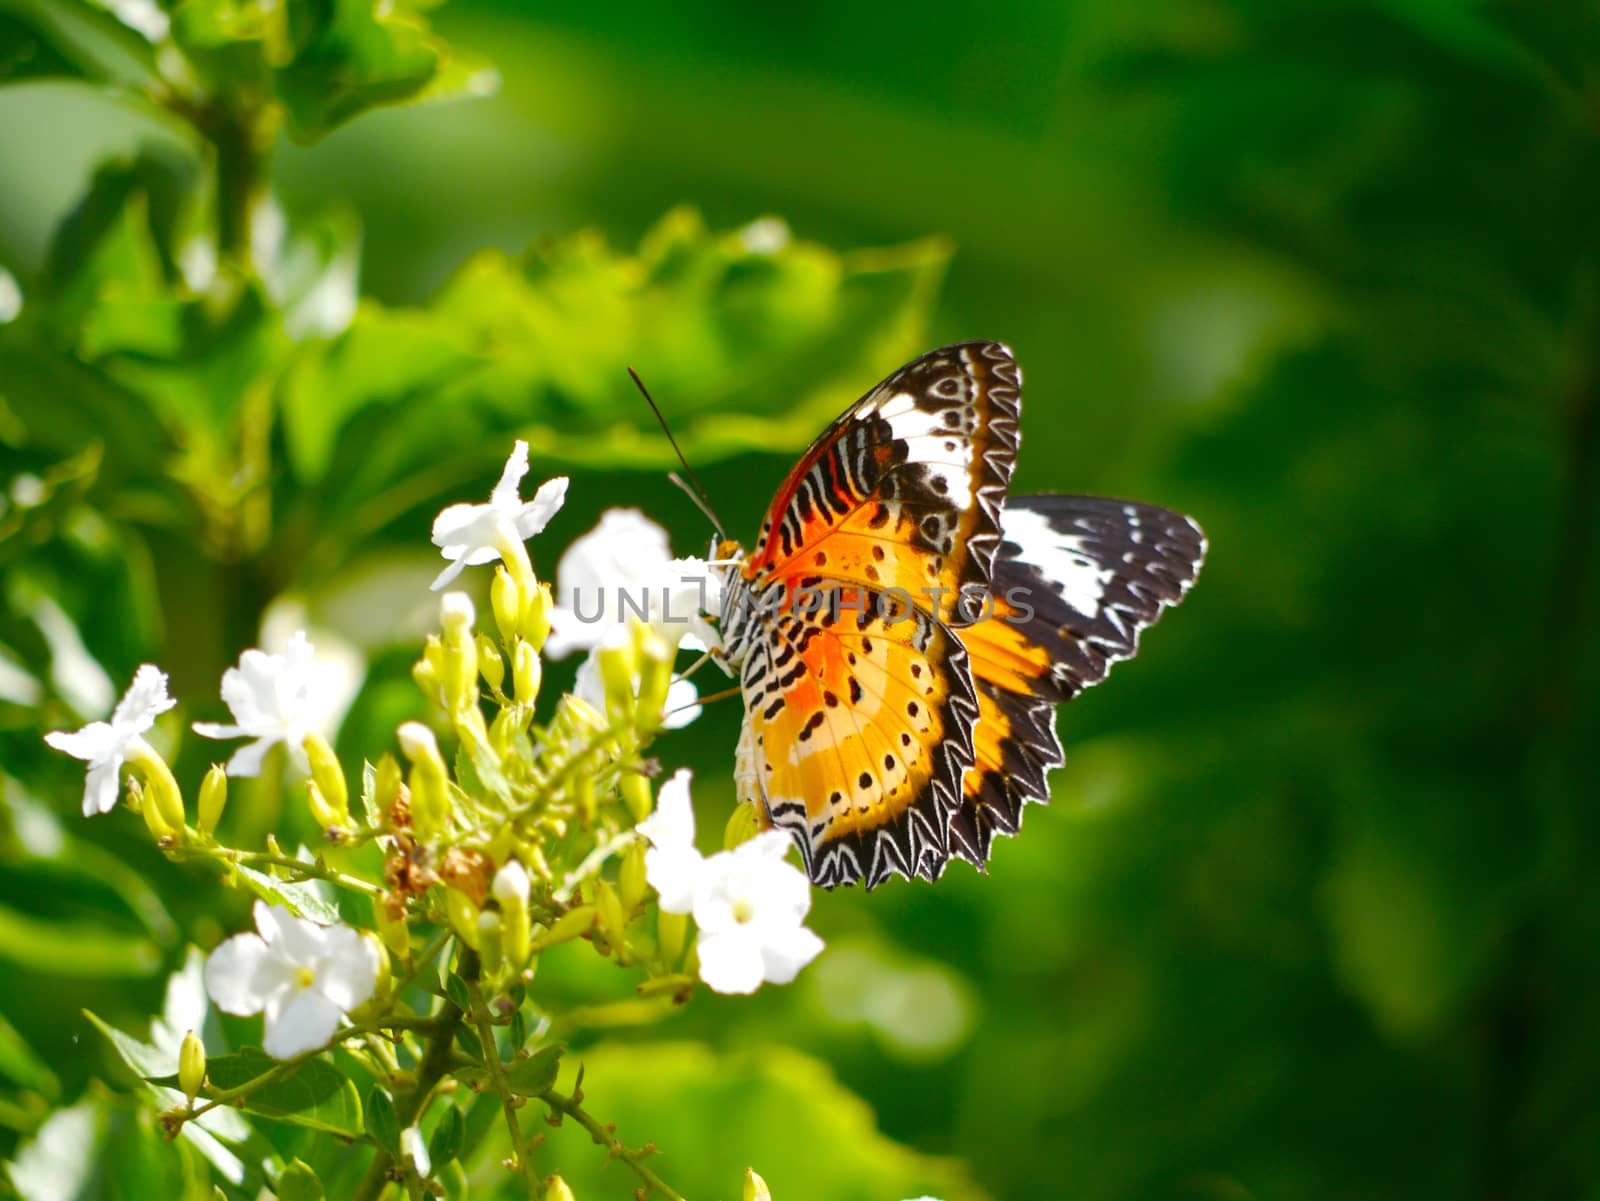 Butterfly on white flower in the garden